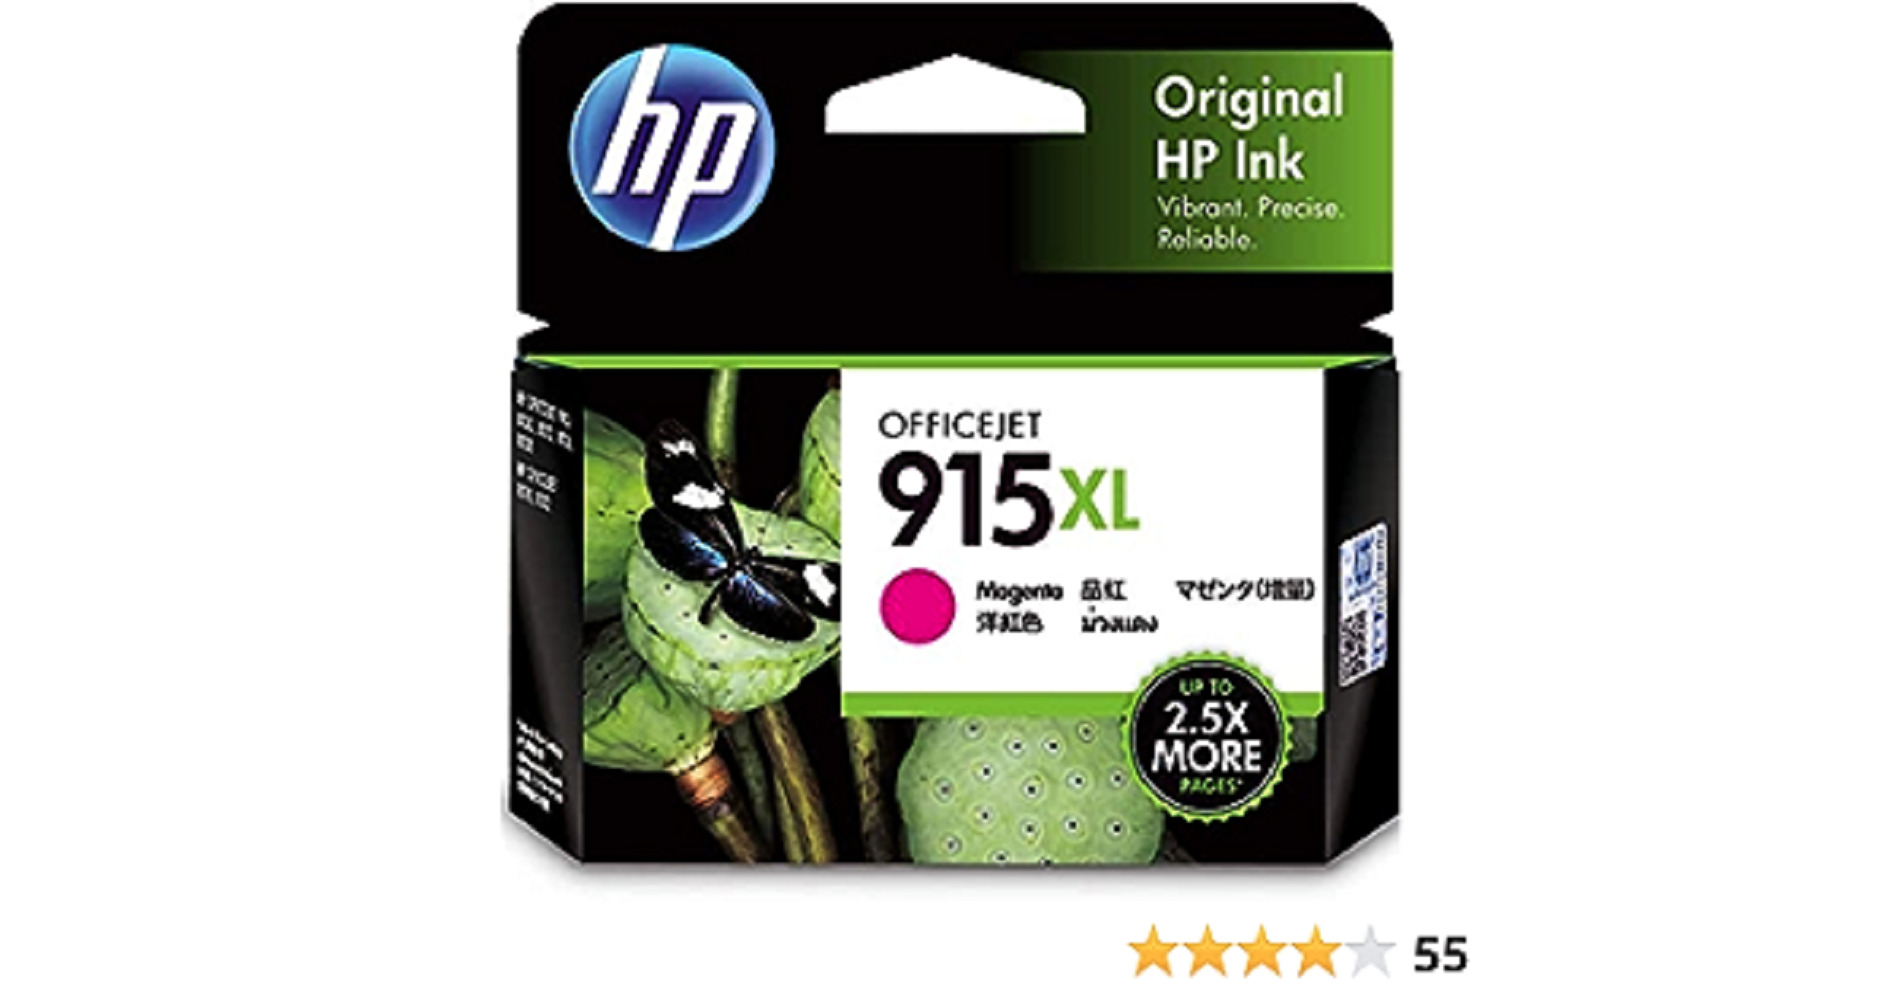 HP 915XL High Yield Magenta Original Ink Cartridge